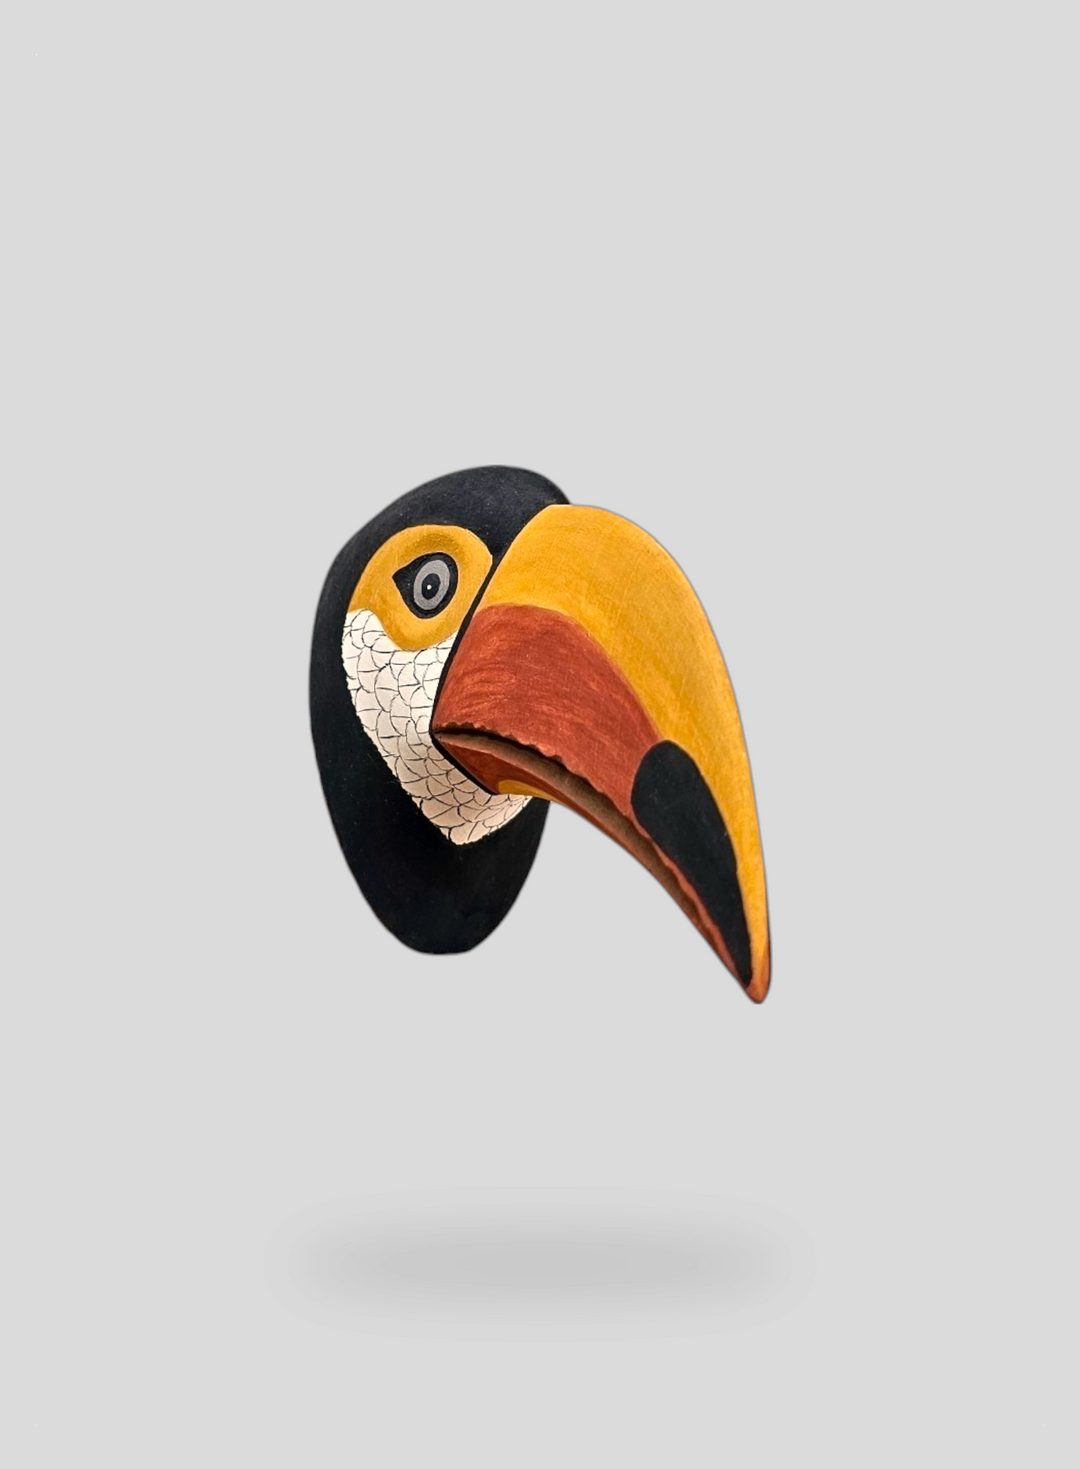 The Toucan